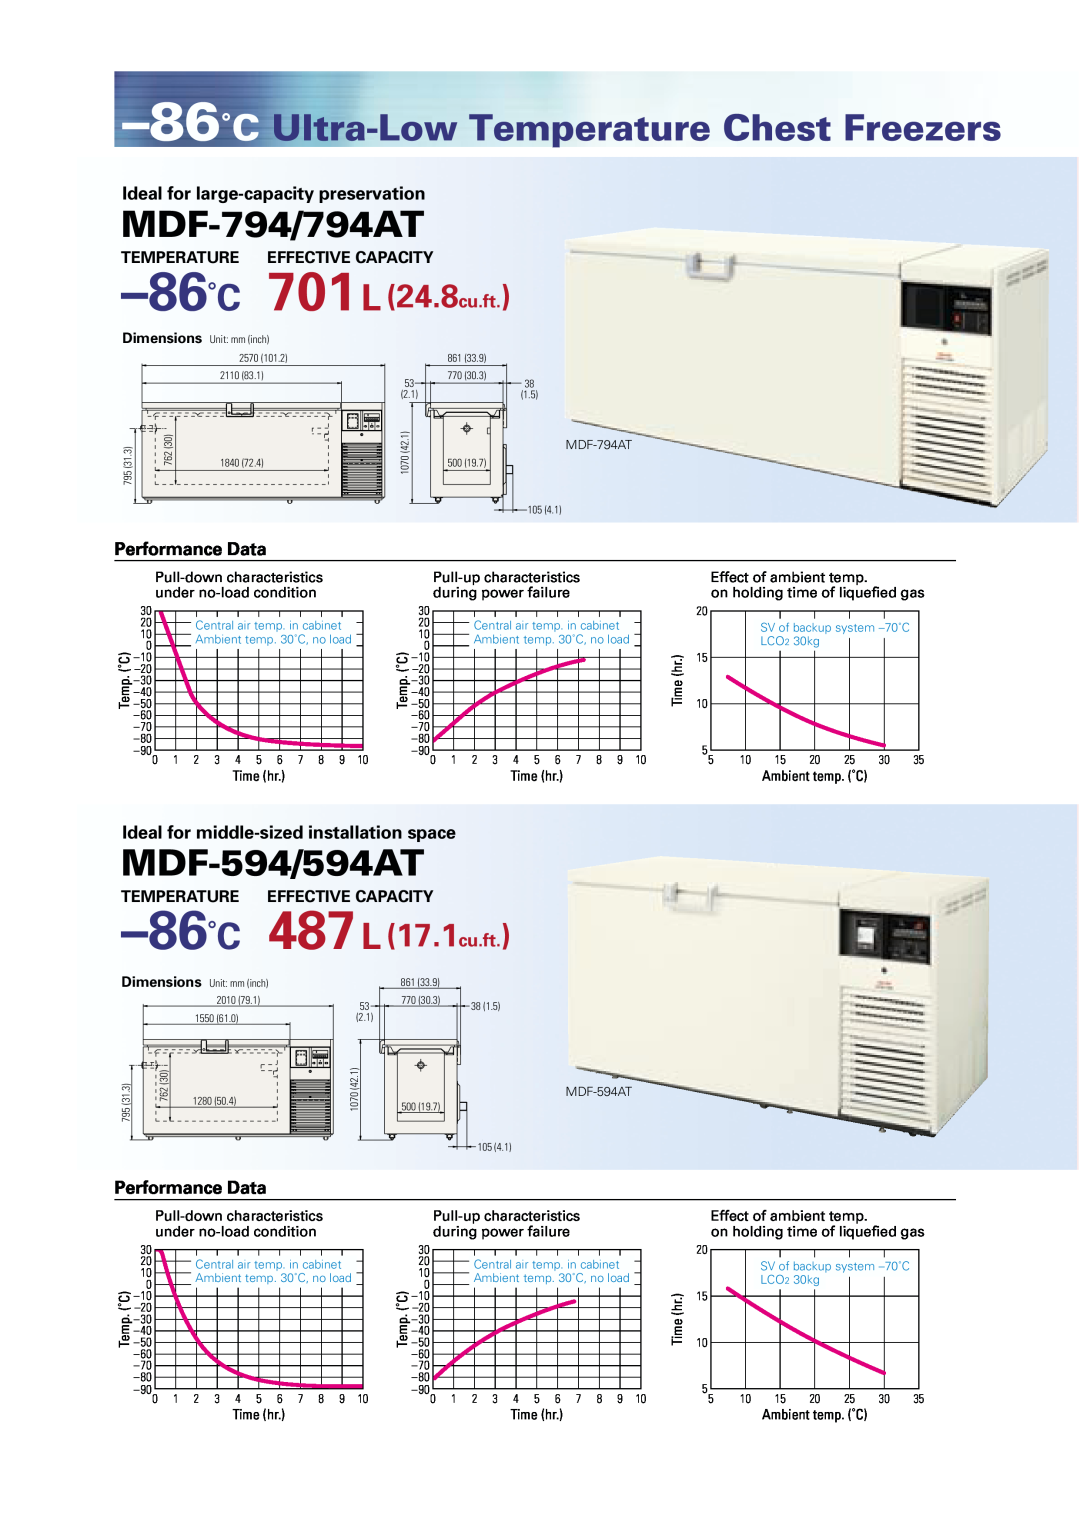 Sanyo MDF-1156ATN 86˚C Ultra-LowTemperature Chest Freezers, MDF-794/794AT, MDF-594/594AT, 86˚C 701L 24.8cu.ft, Temp. ˚C 